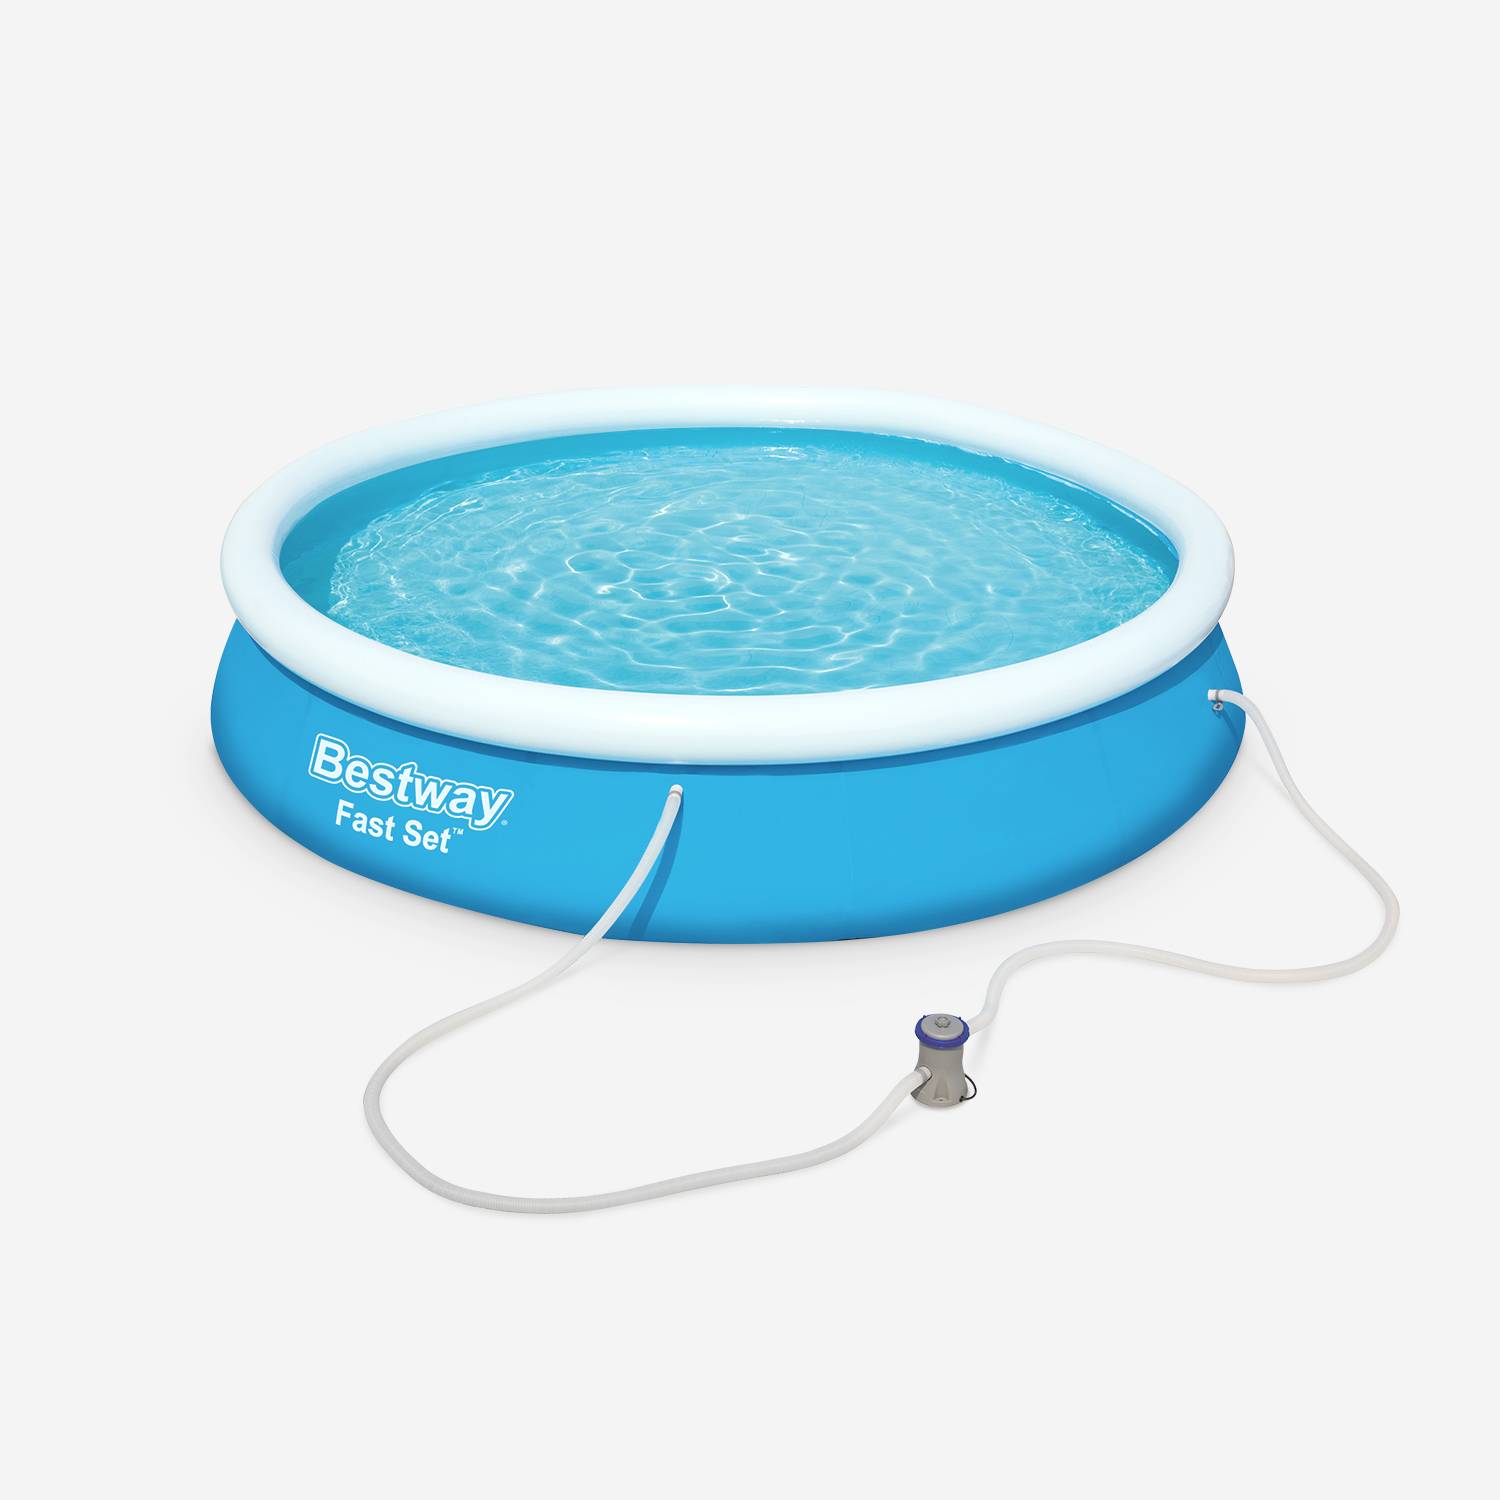 BESTWAY piscina gonfiabile autoportante blu - Jade ⌀ 360 x 76 cm - piscina fuori terra rotonda autoportante con filtro a cartuccia  + 1 cartuccia inclusa,sweeek,Photo2